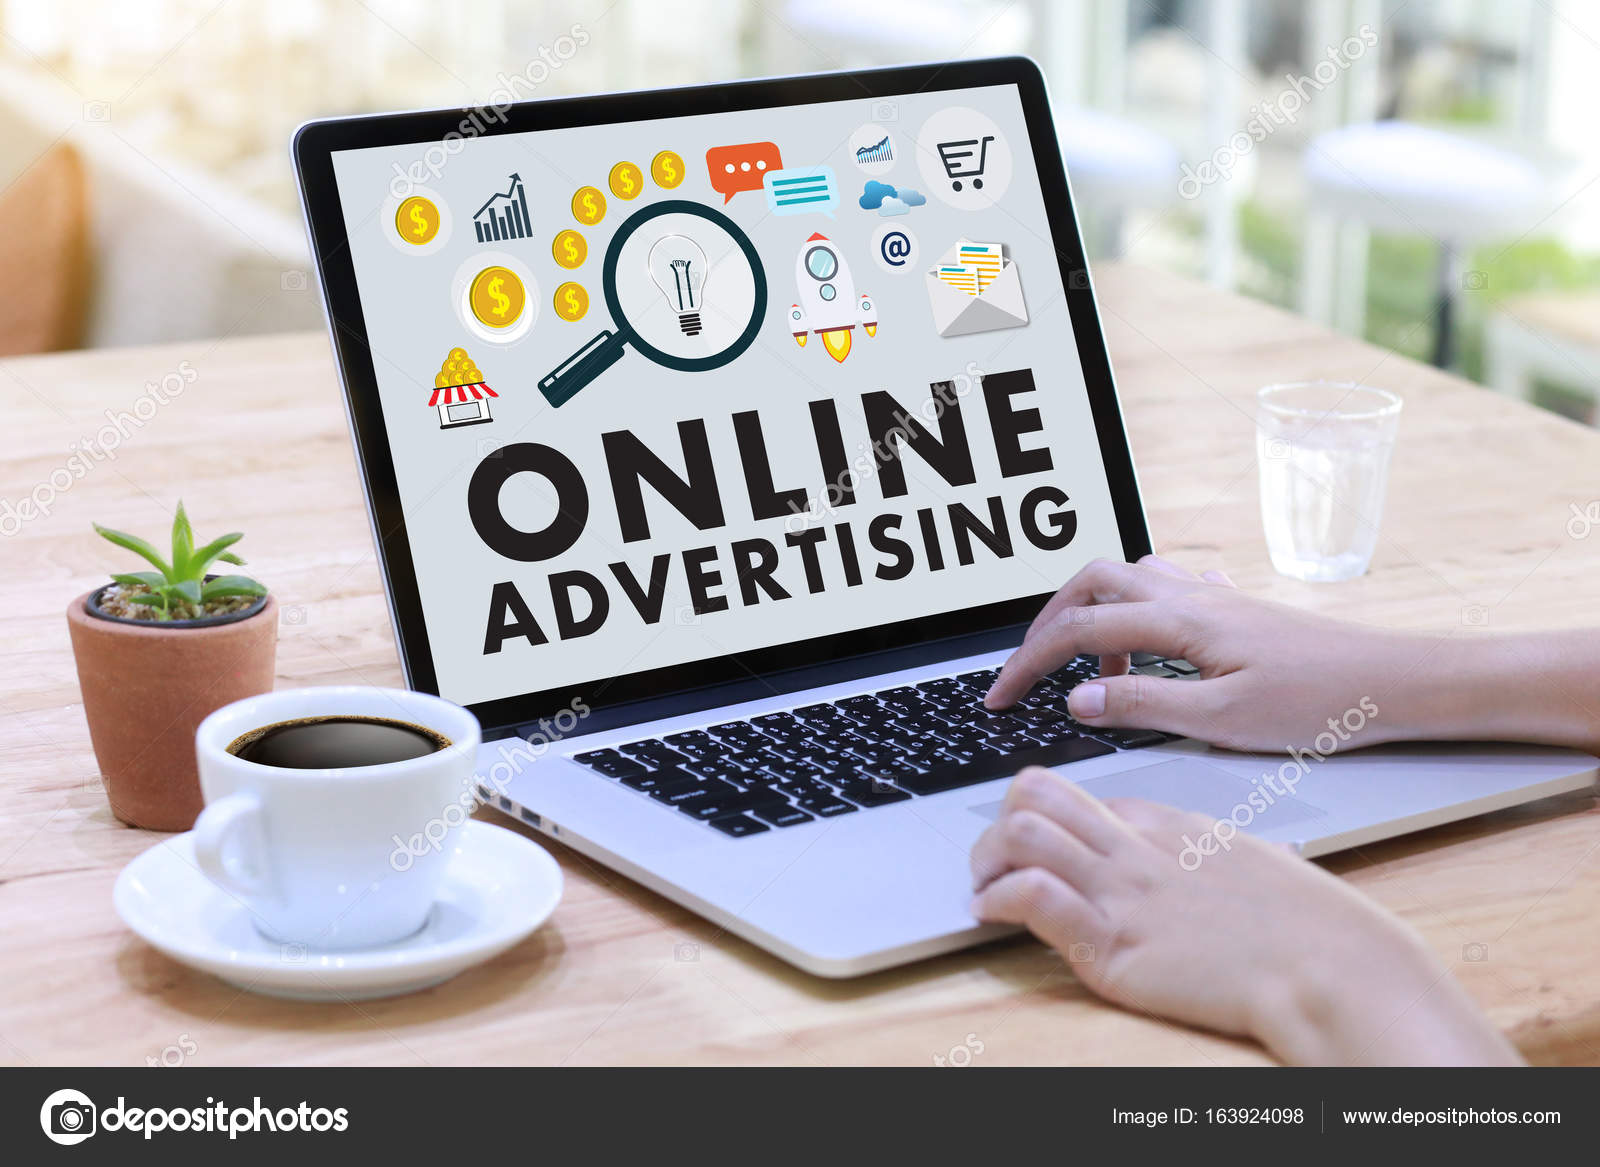 Advertising images. Реклама в интернете. Рекламный в интернете. Реклама в интернете картинки. Интернет реклама изображение.